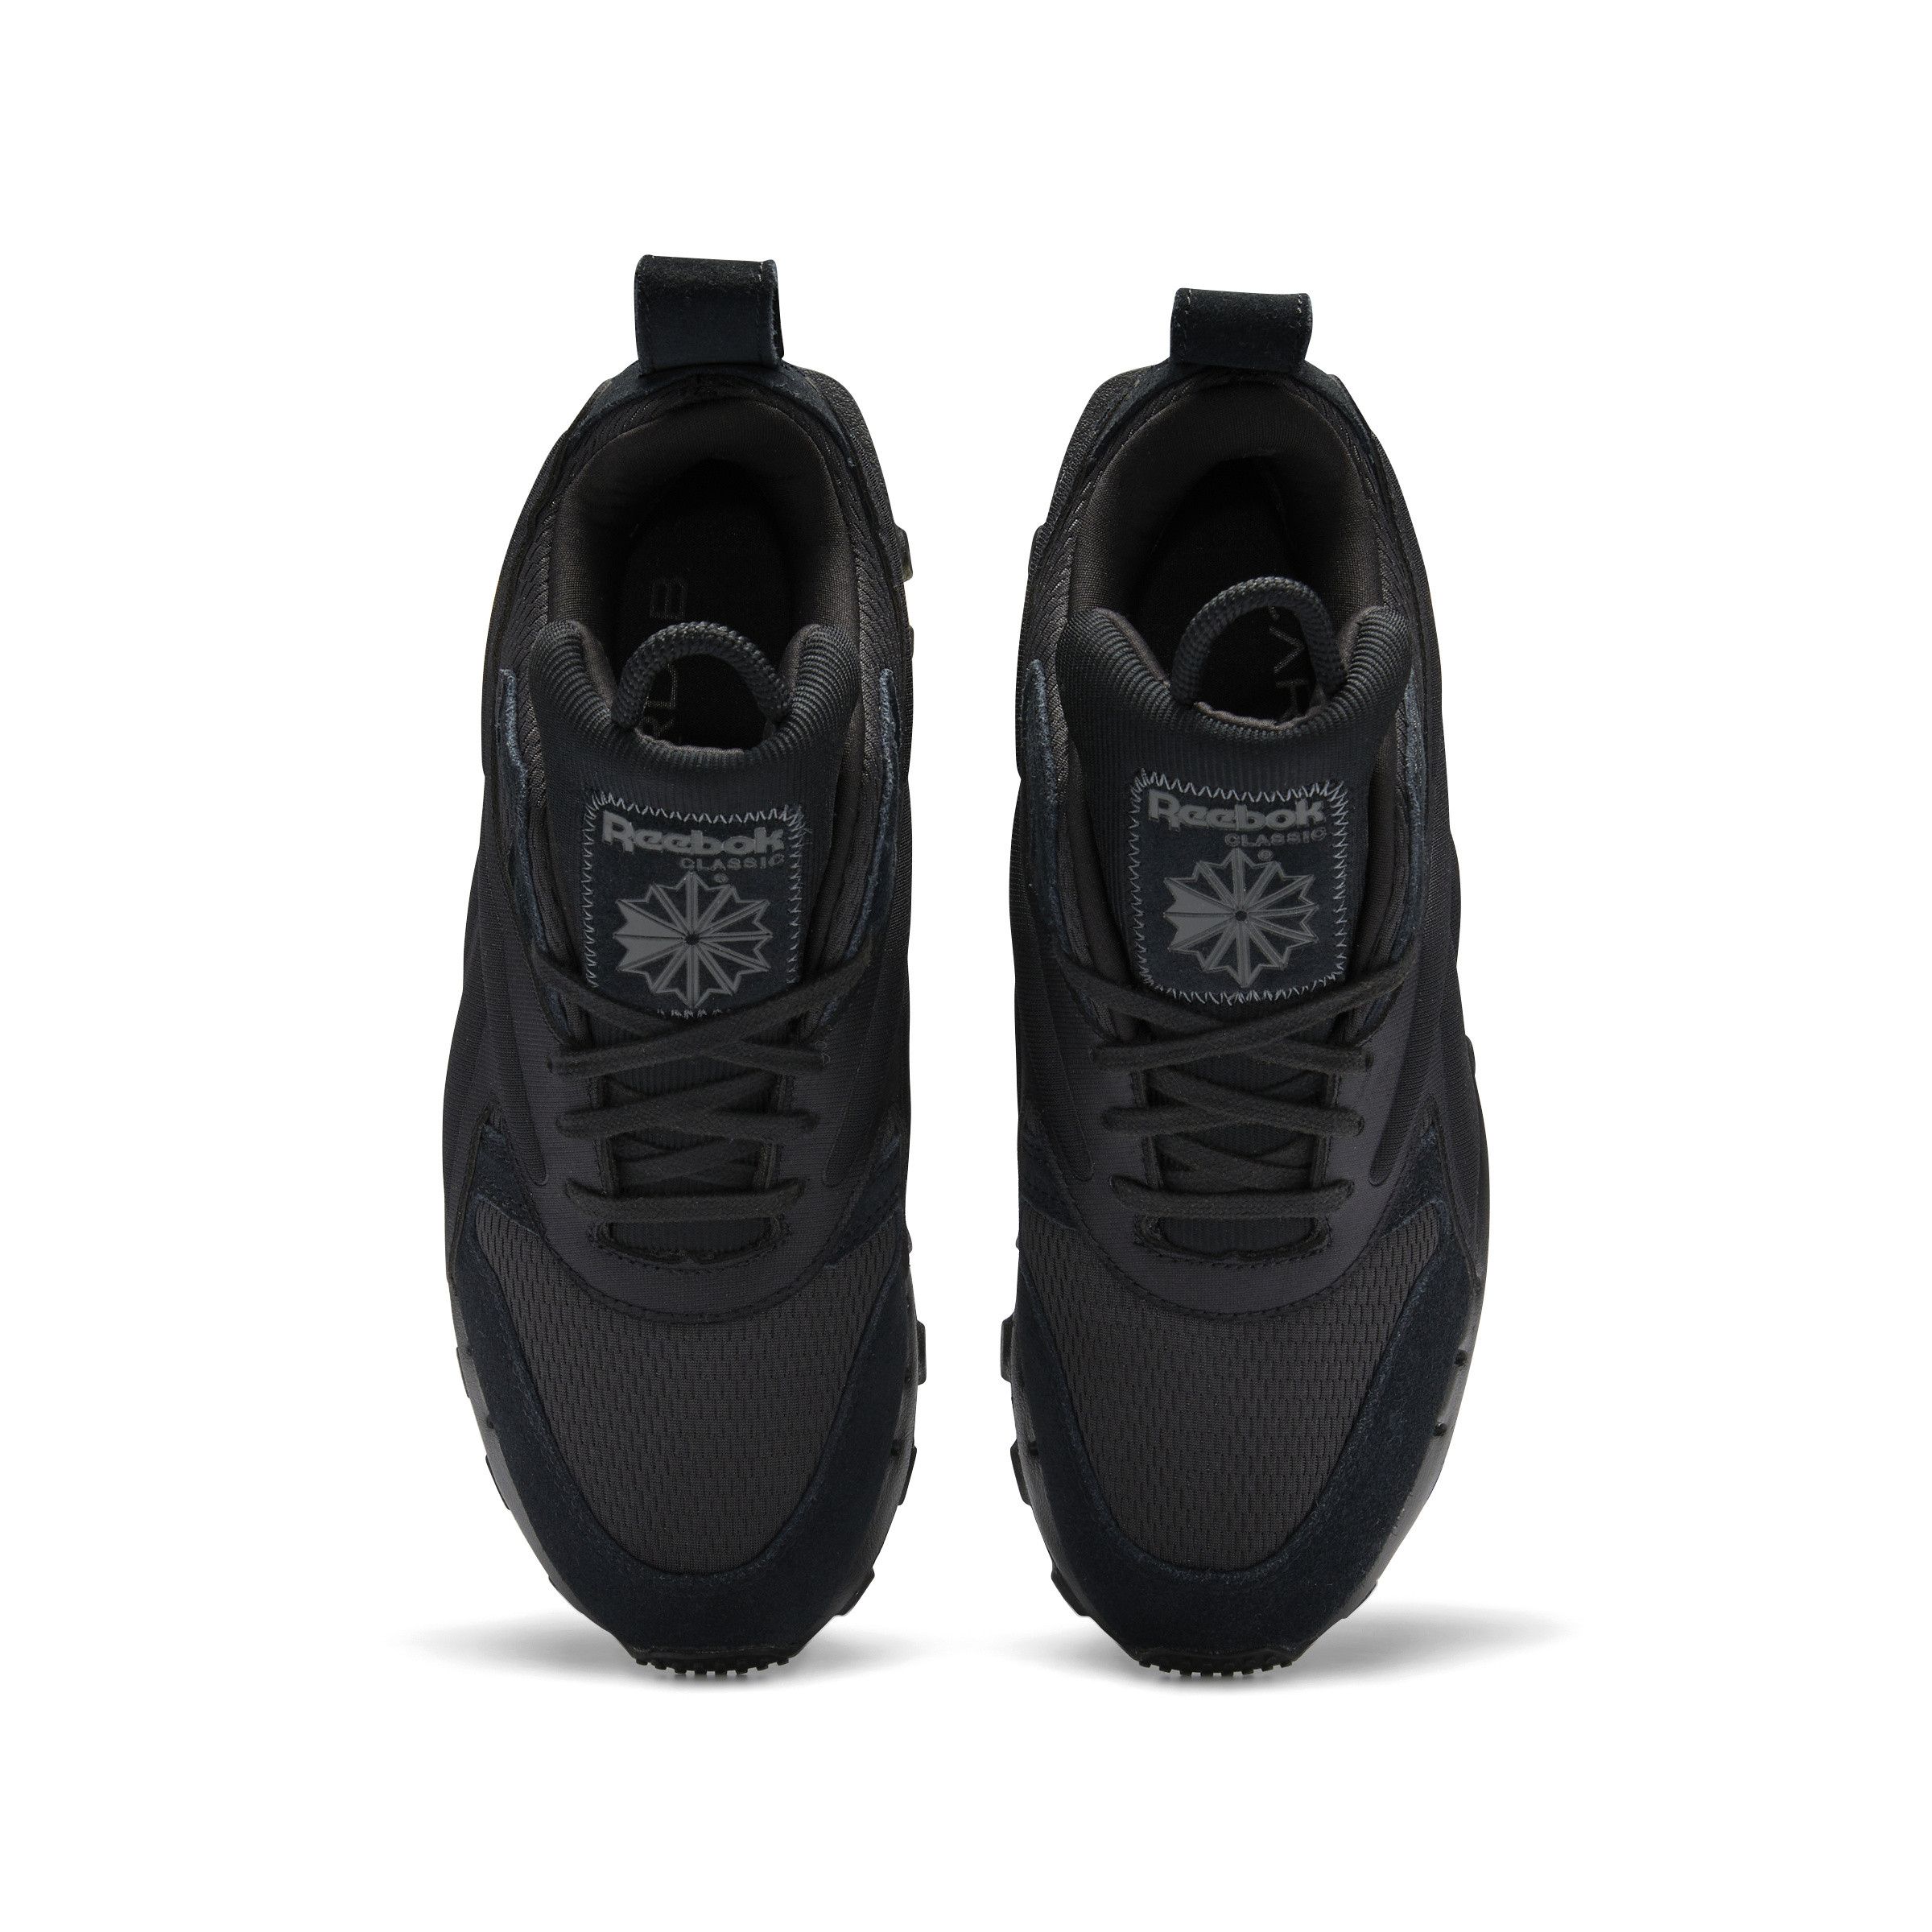 Classic Leather Cardi B V2 Shoes, Black, large image number 1